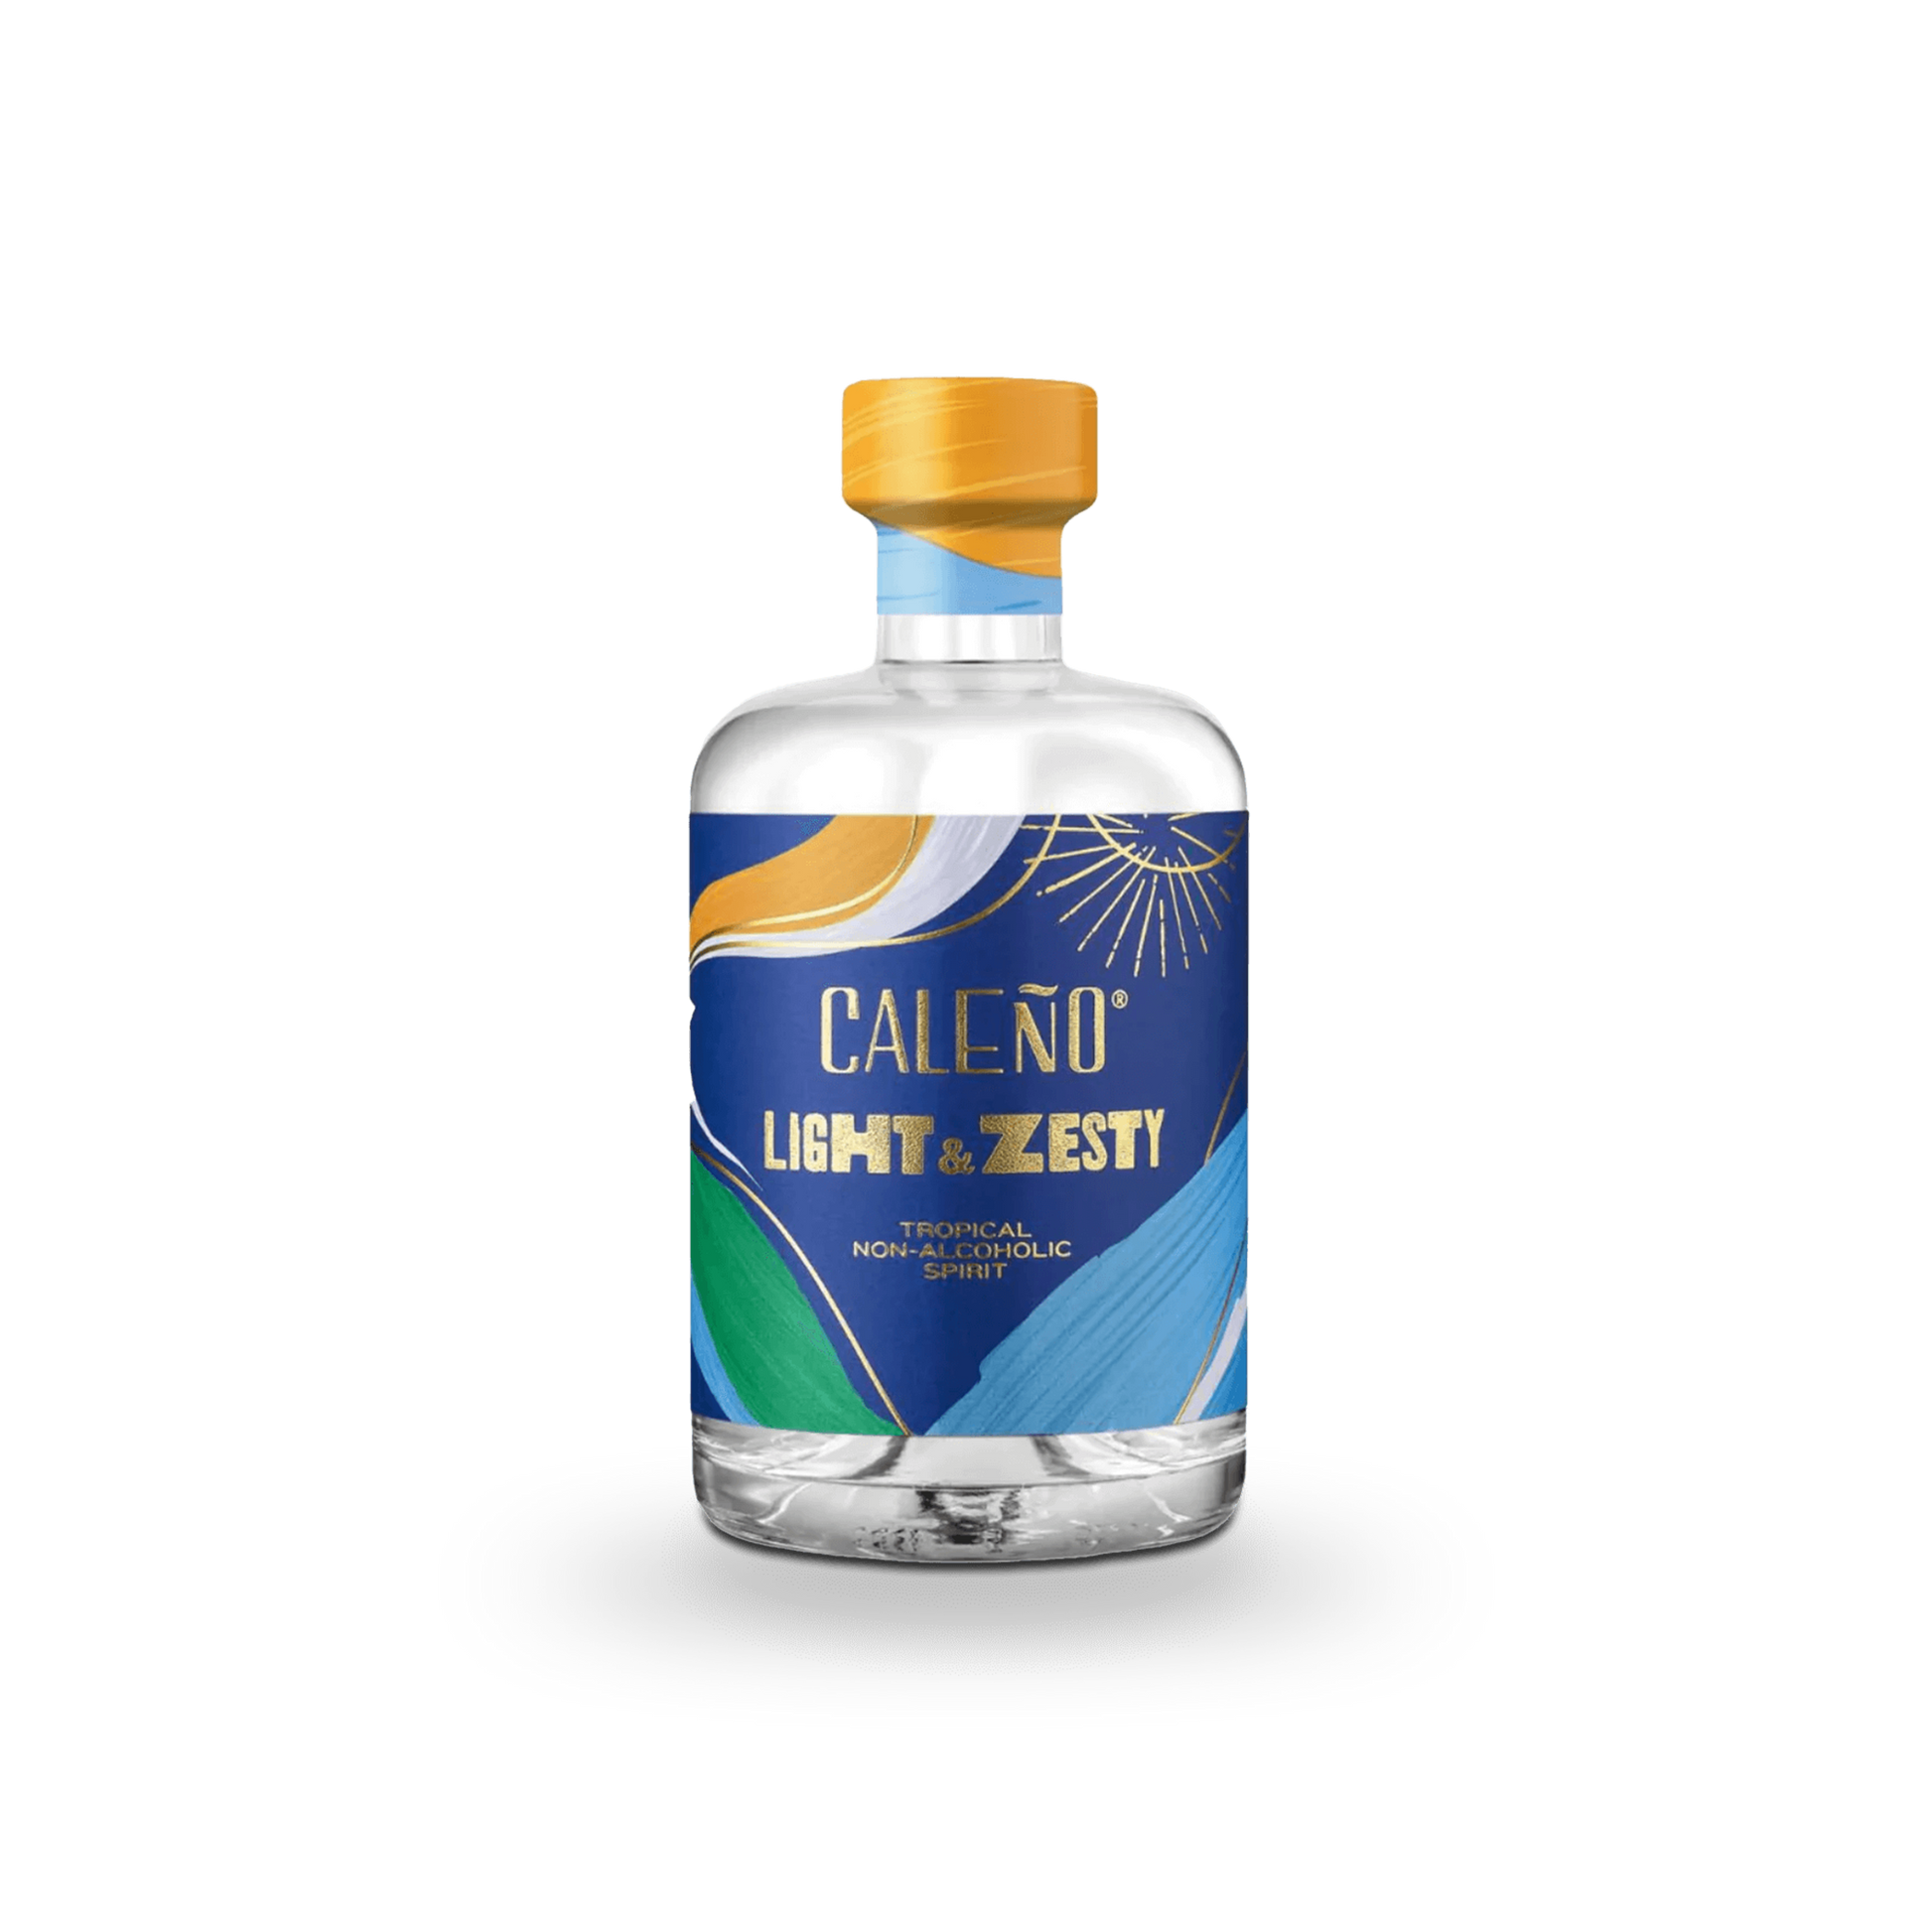 Caleno Light & Zesty Tropical Non-Alcoholic Gin Bottle